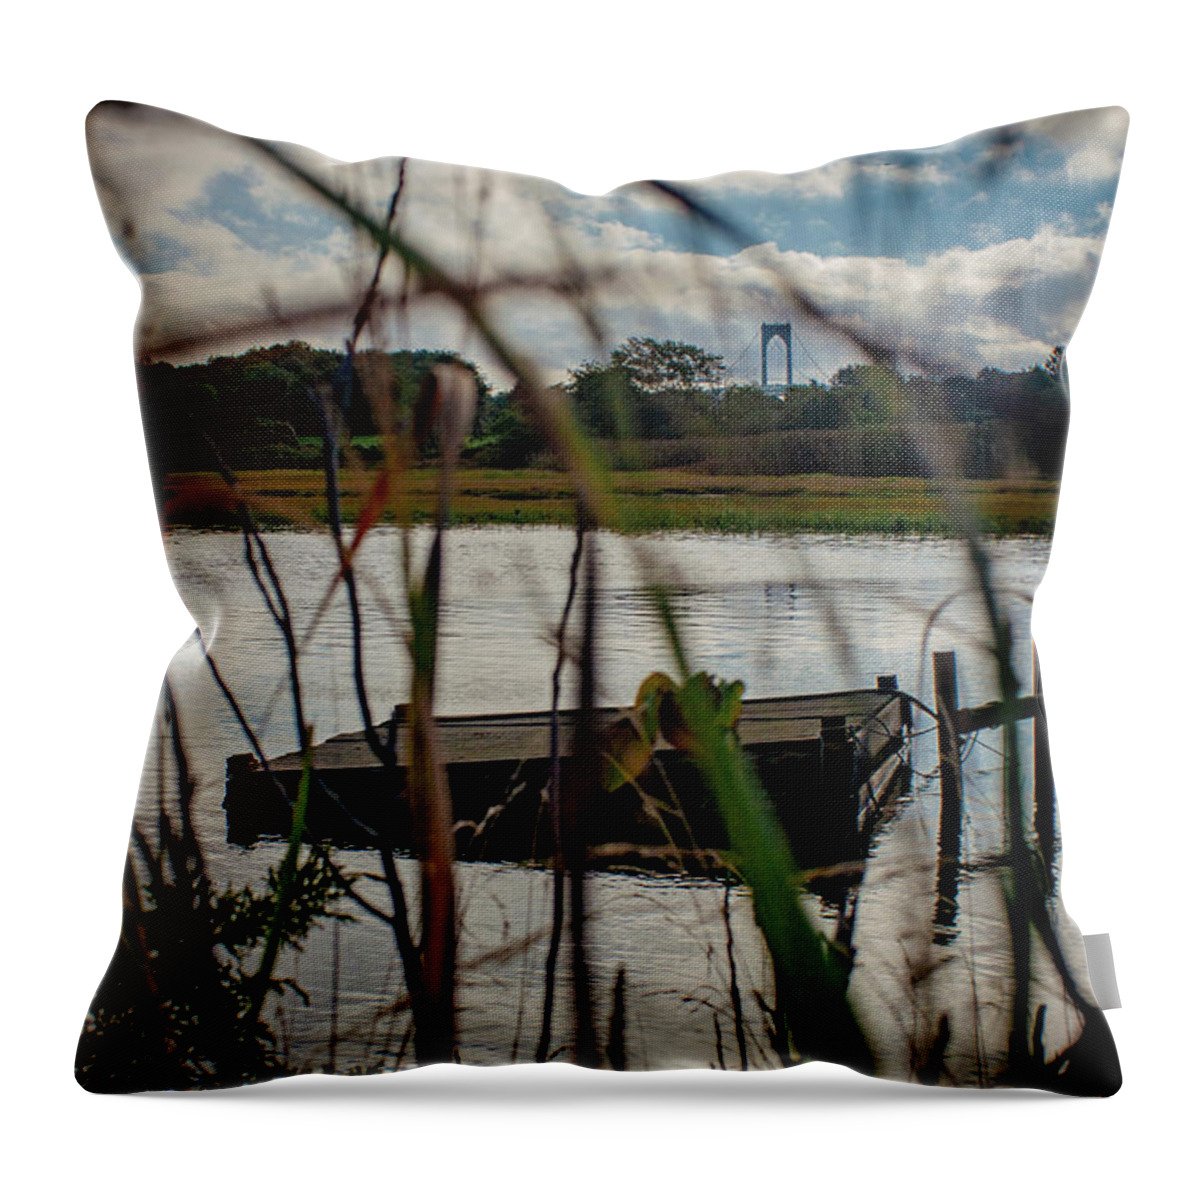 Claiborne Pell Bridge Throw Pillow featuring the photograph Through the reeds by Jim Feldman